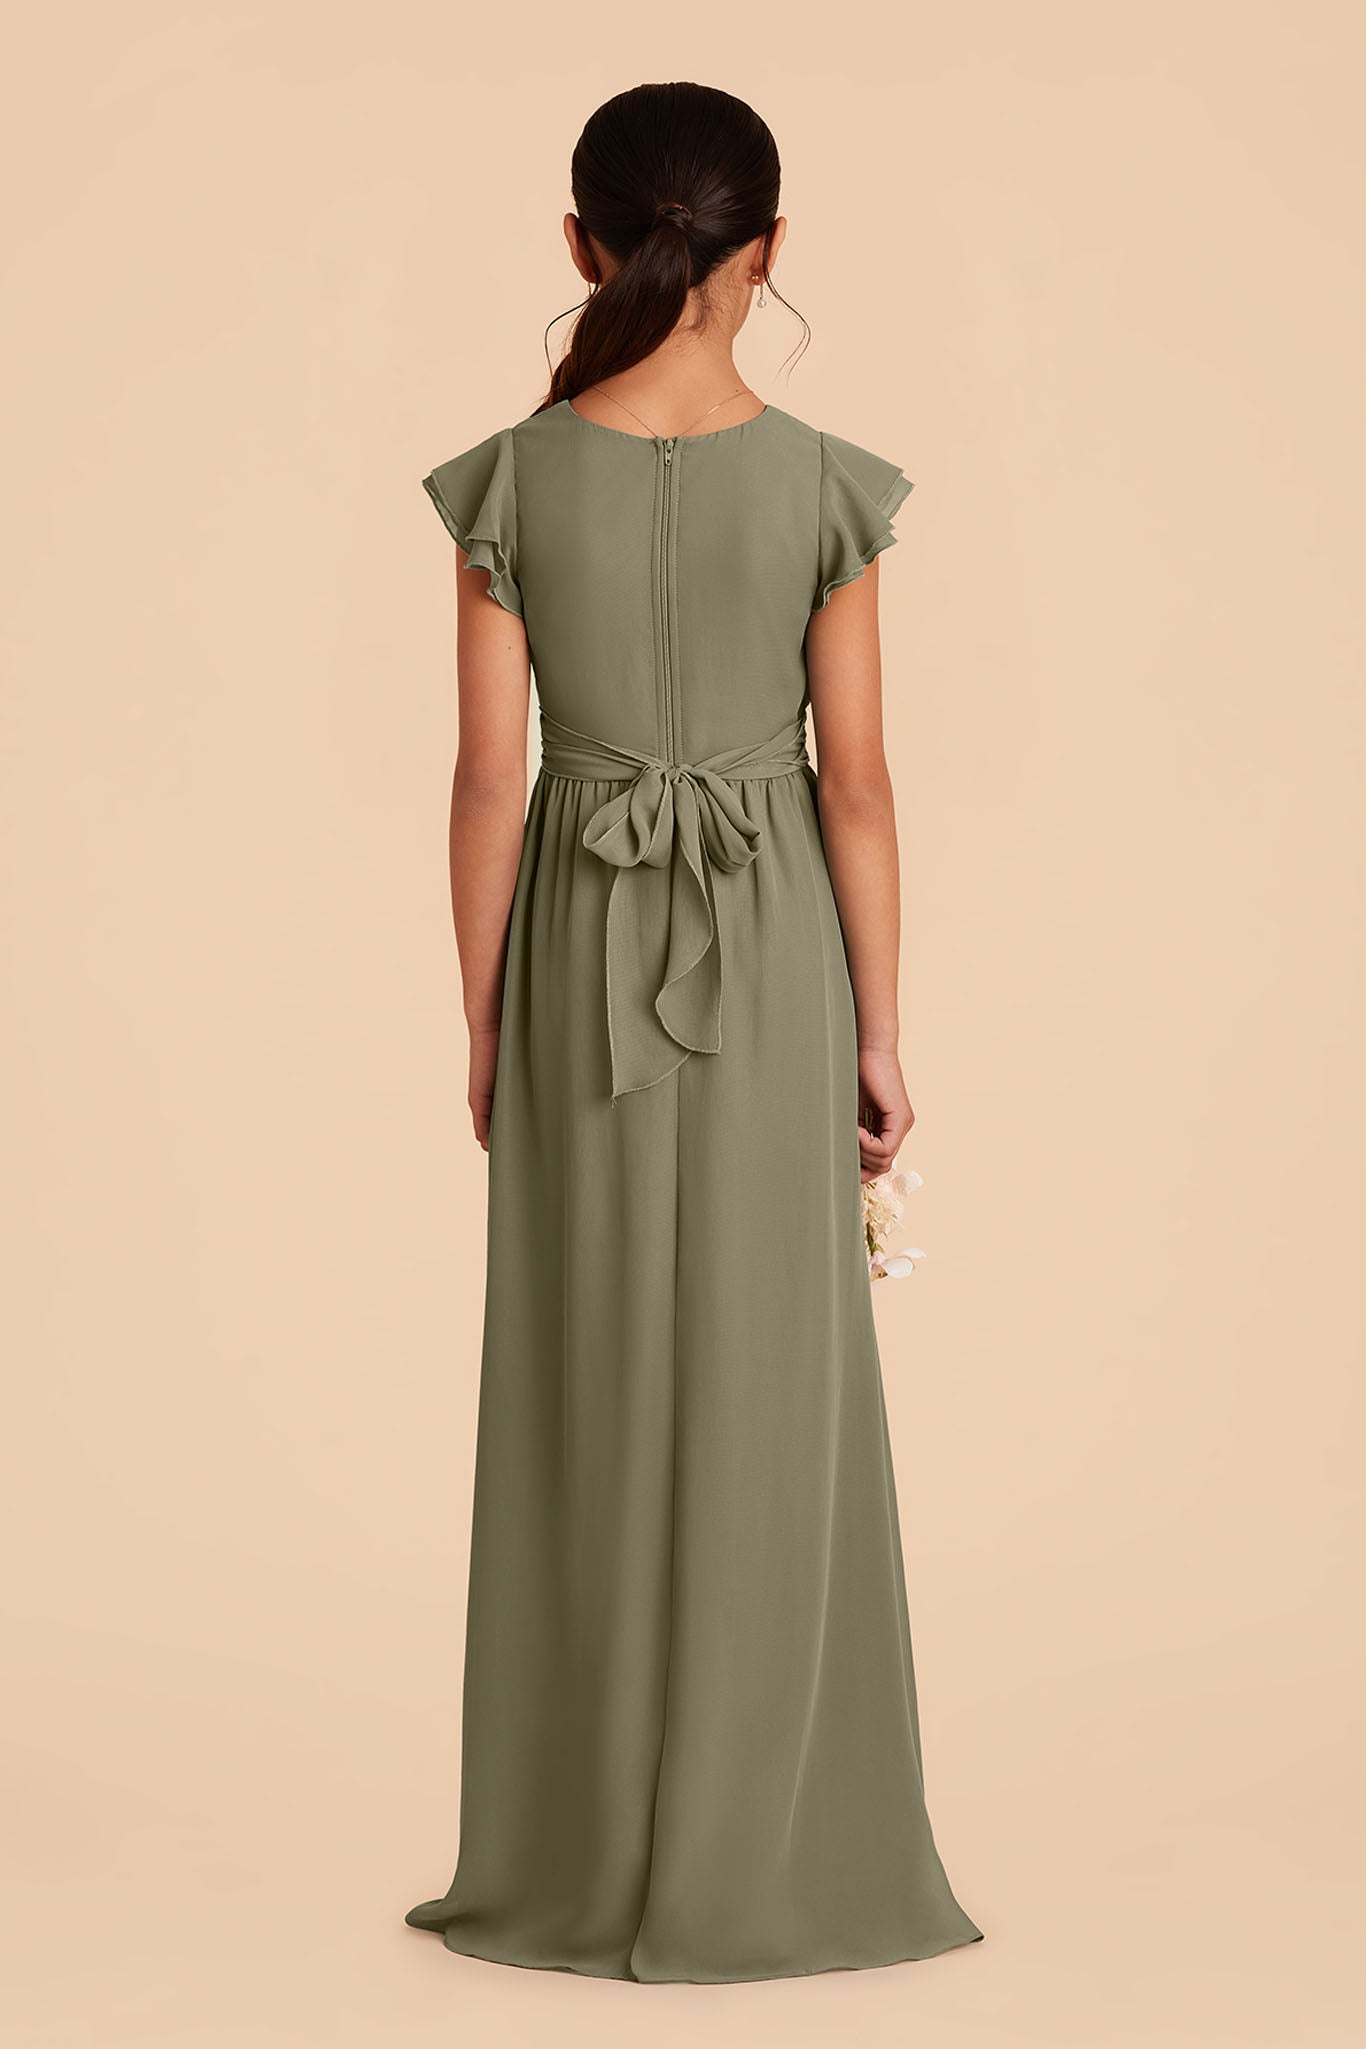 Moss Green Celine Junior Dress by Birdy Grey